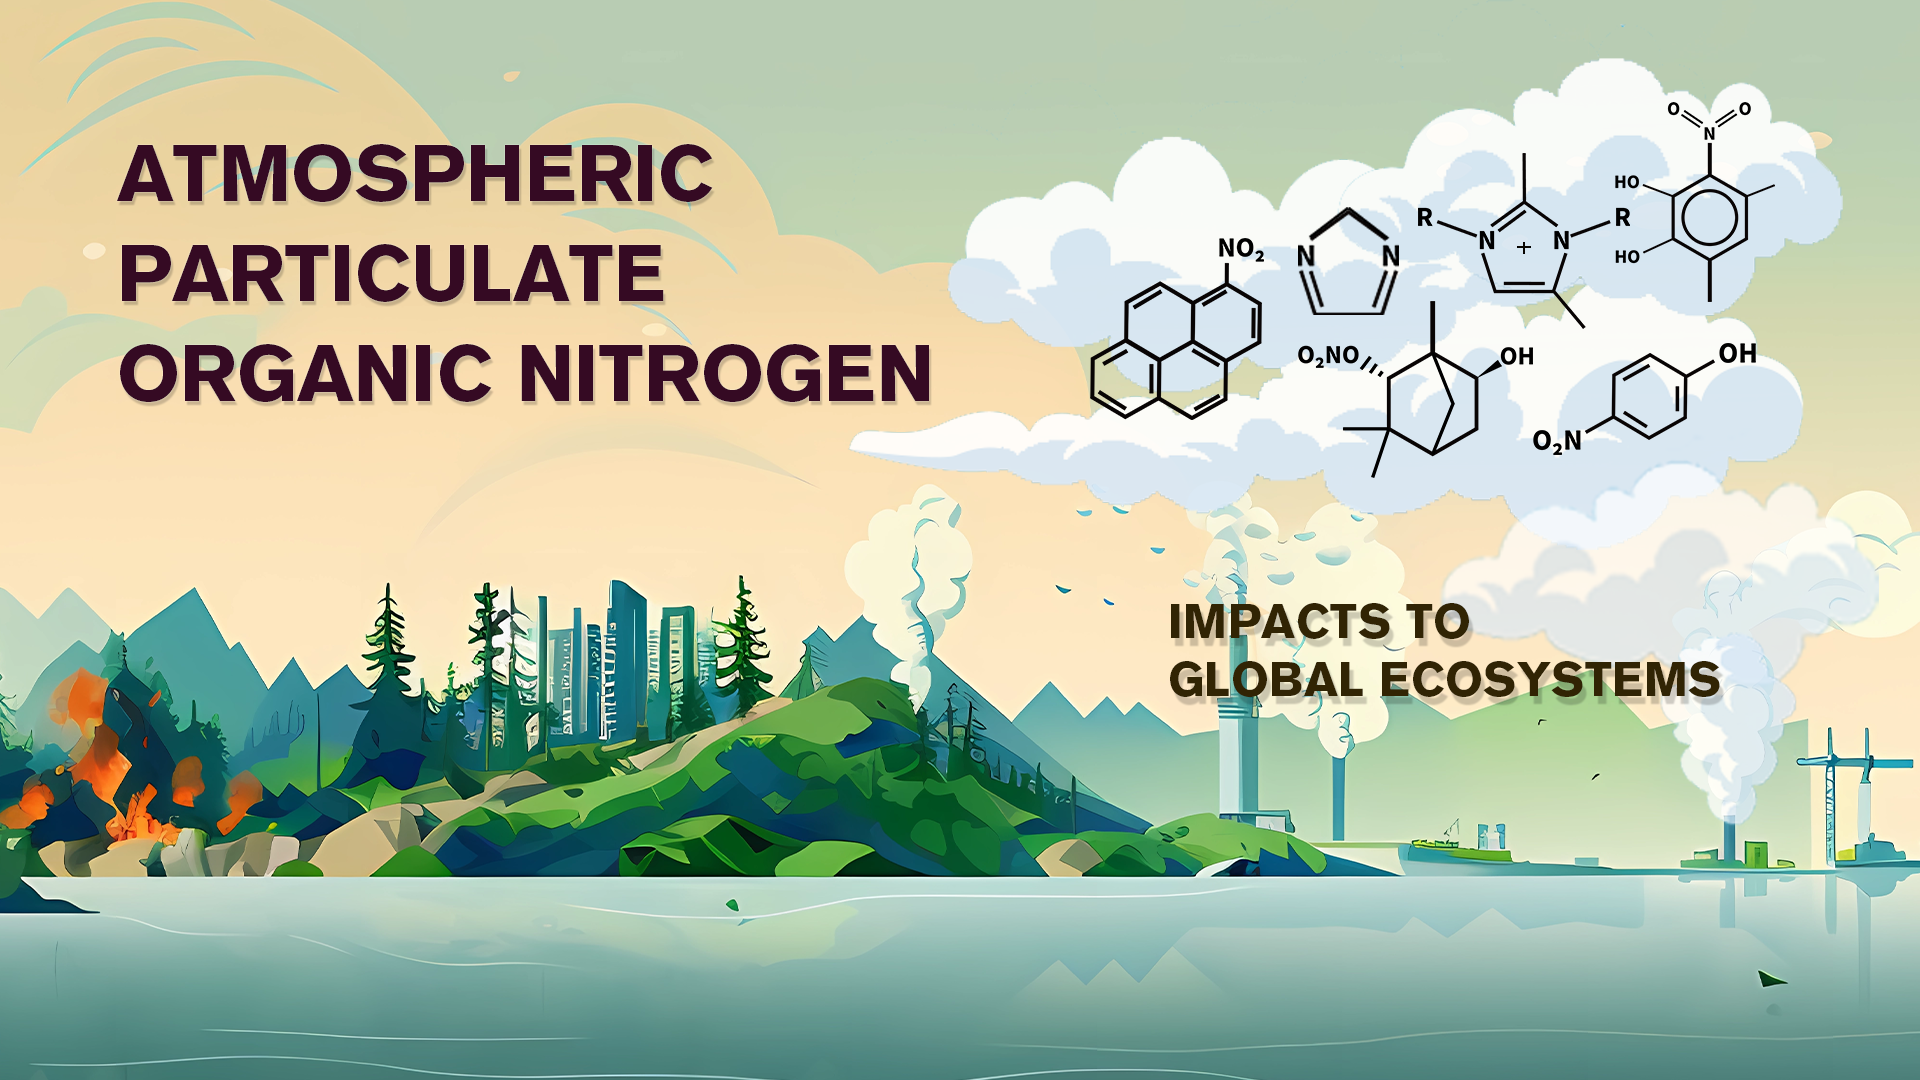 Researchers show organic nitrogen aerosol to be important contributor to global atmospheric nitrogen deposition